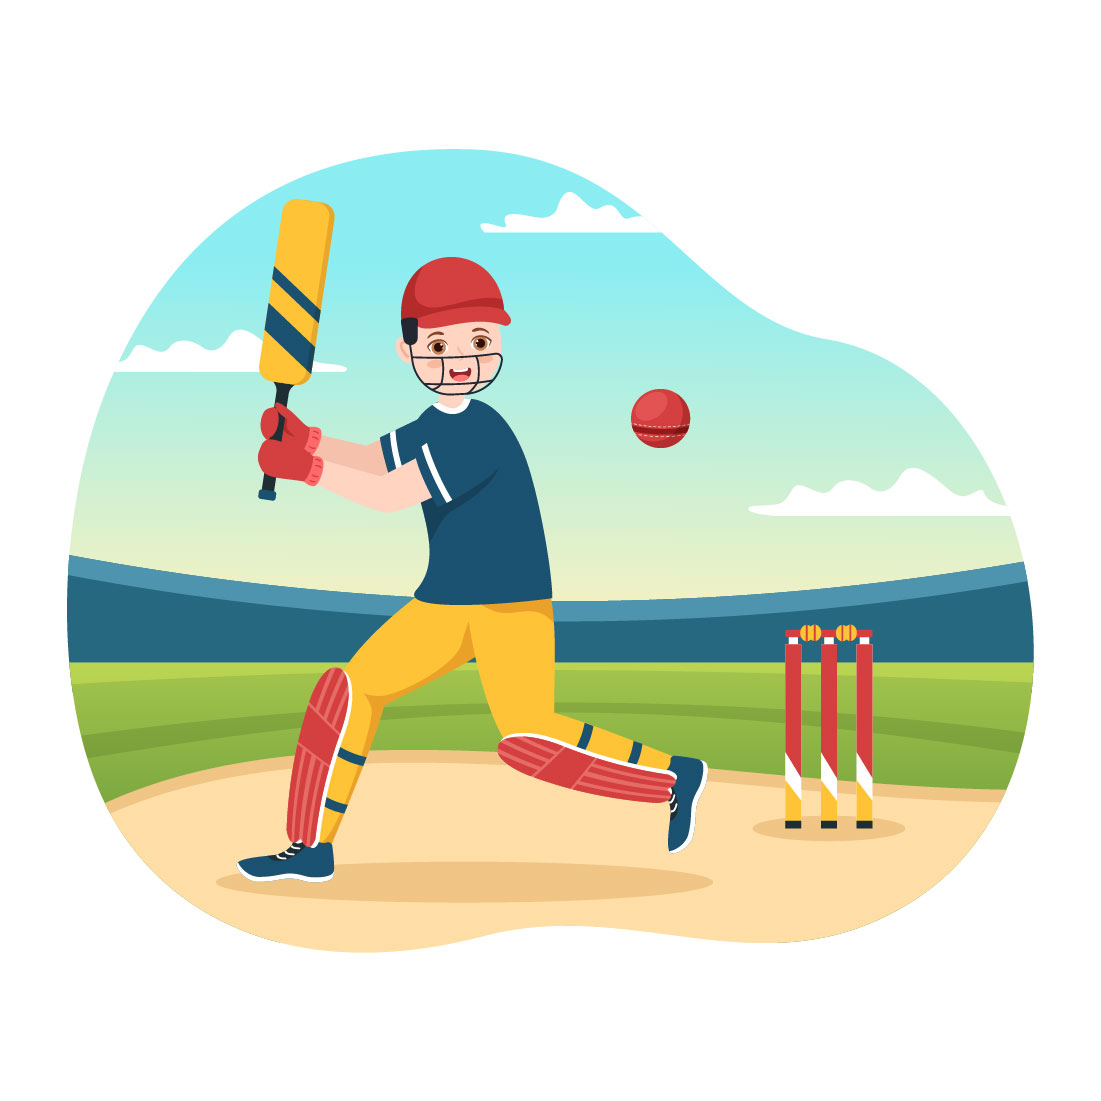 Cricket Sport Illustration cover image.